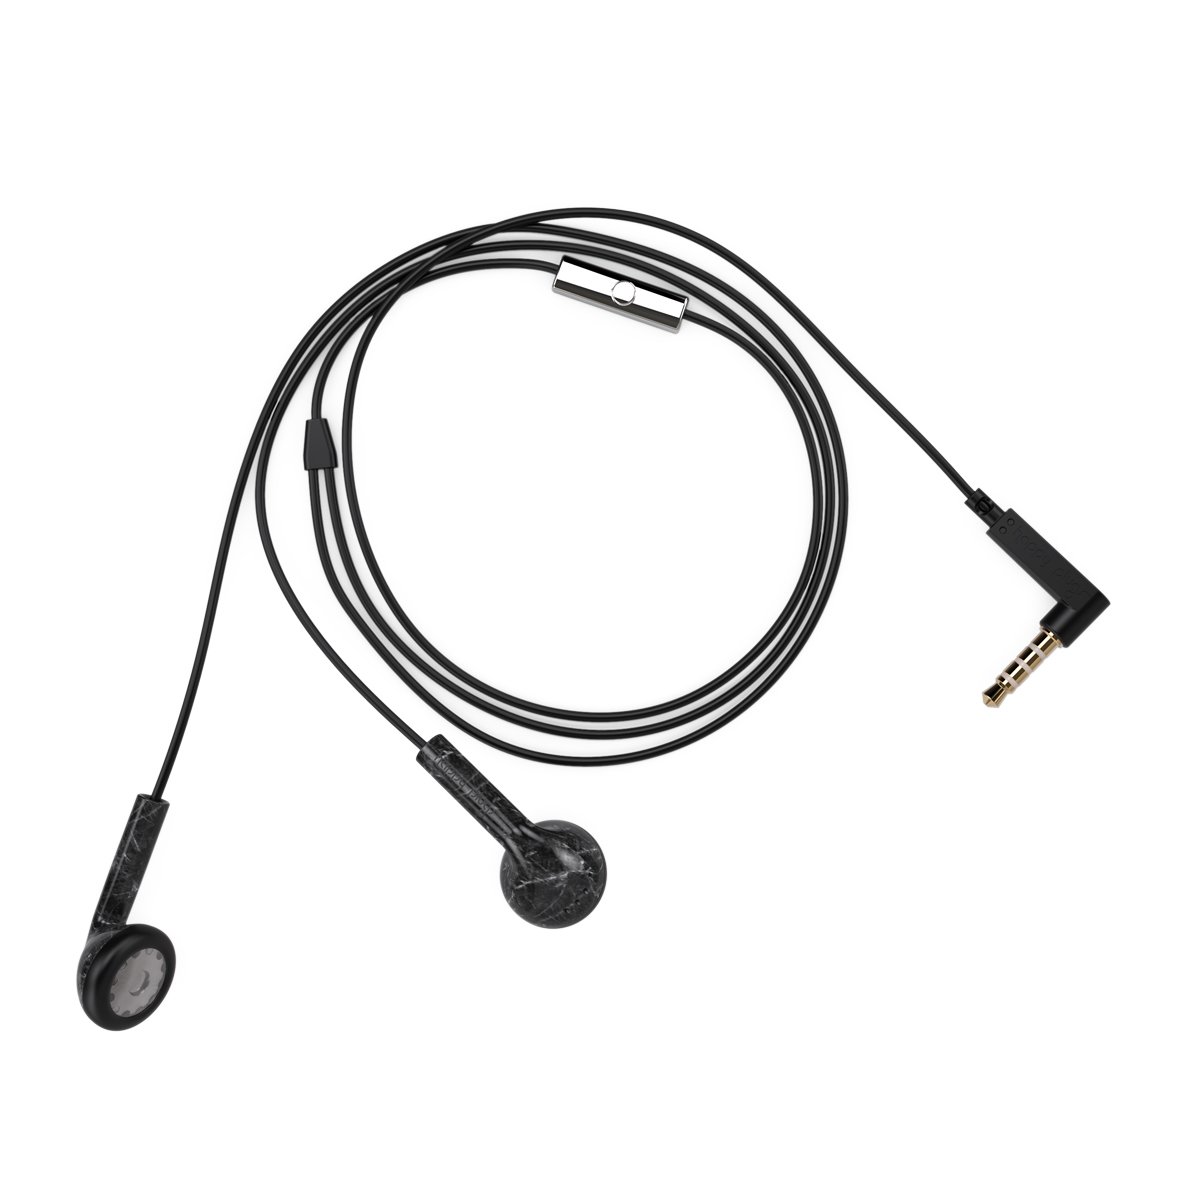 Audífonos Earbud Deluxe Black Marble Happy Plugs